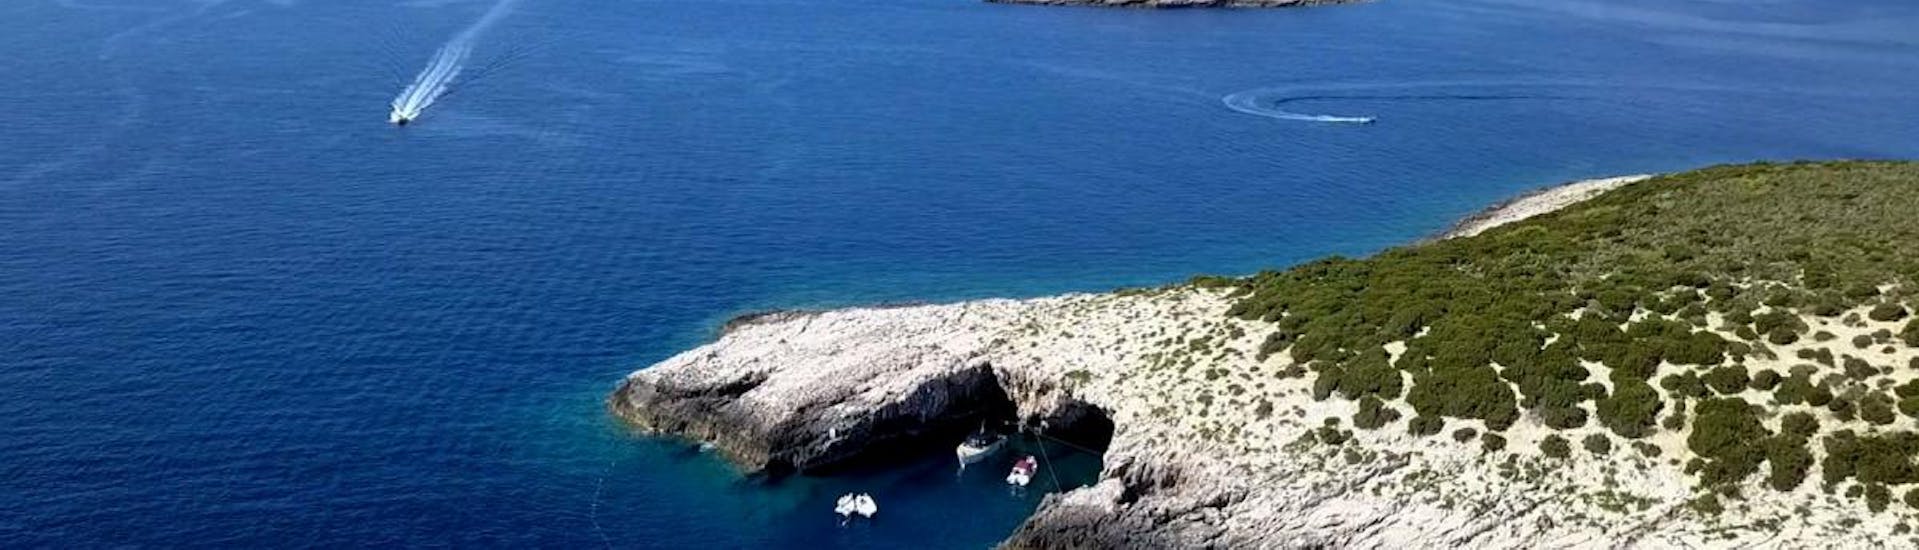 Gita privata in barca da Città di Hvar a Isole Spalmadori  e bagno in mare.